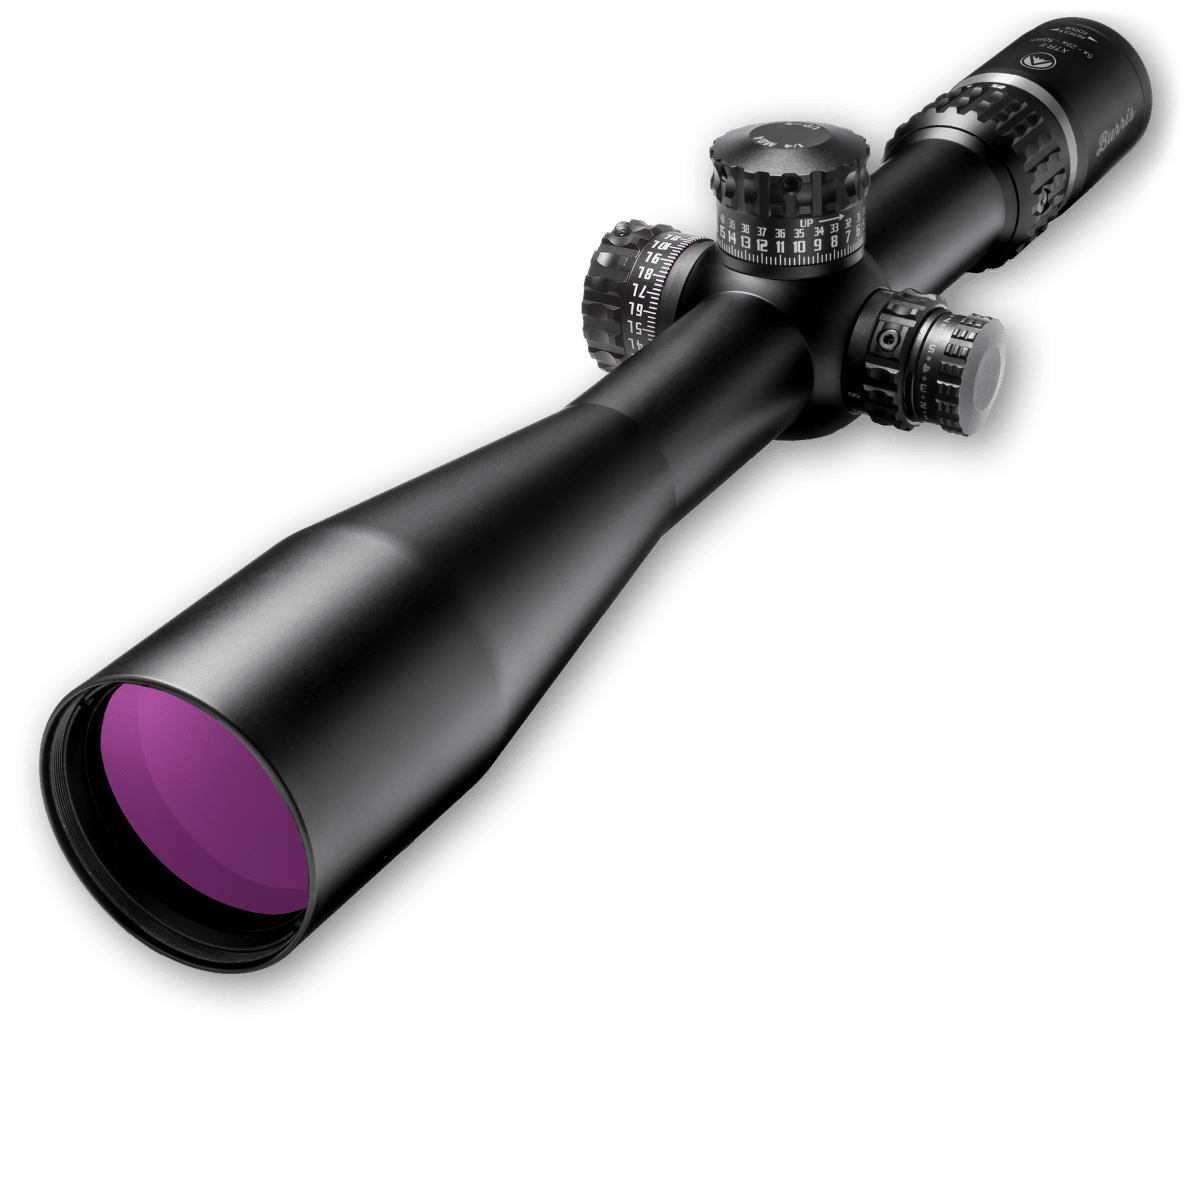 , The Burris XTR II Riflescope 5-25x50mm – a quick overview